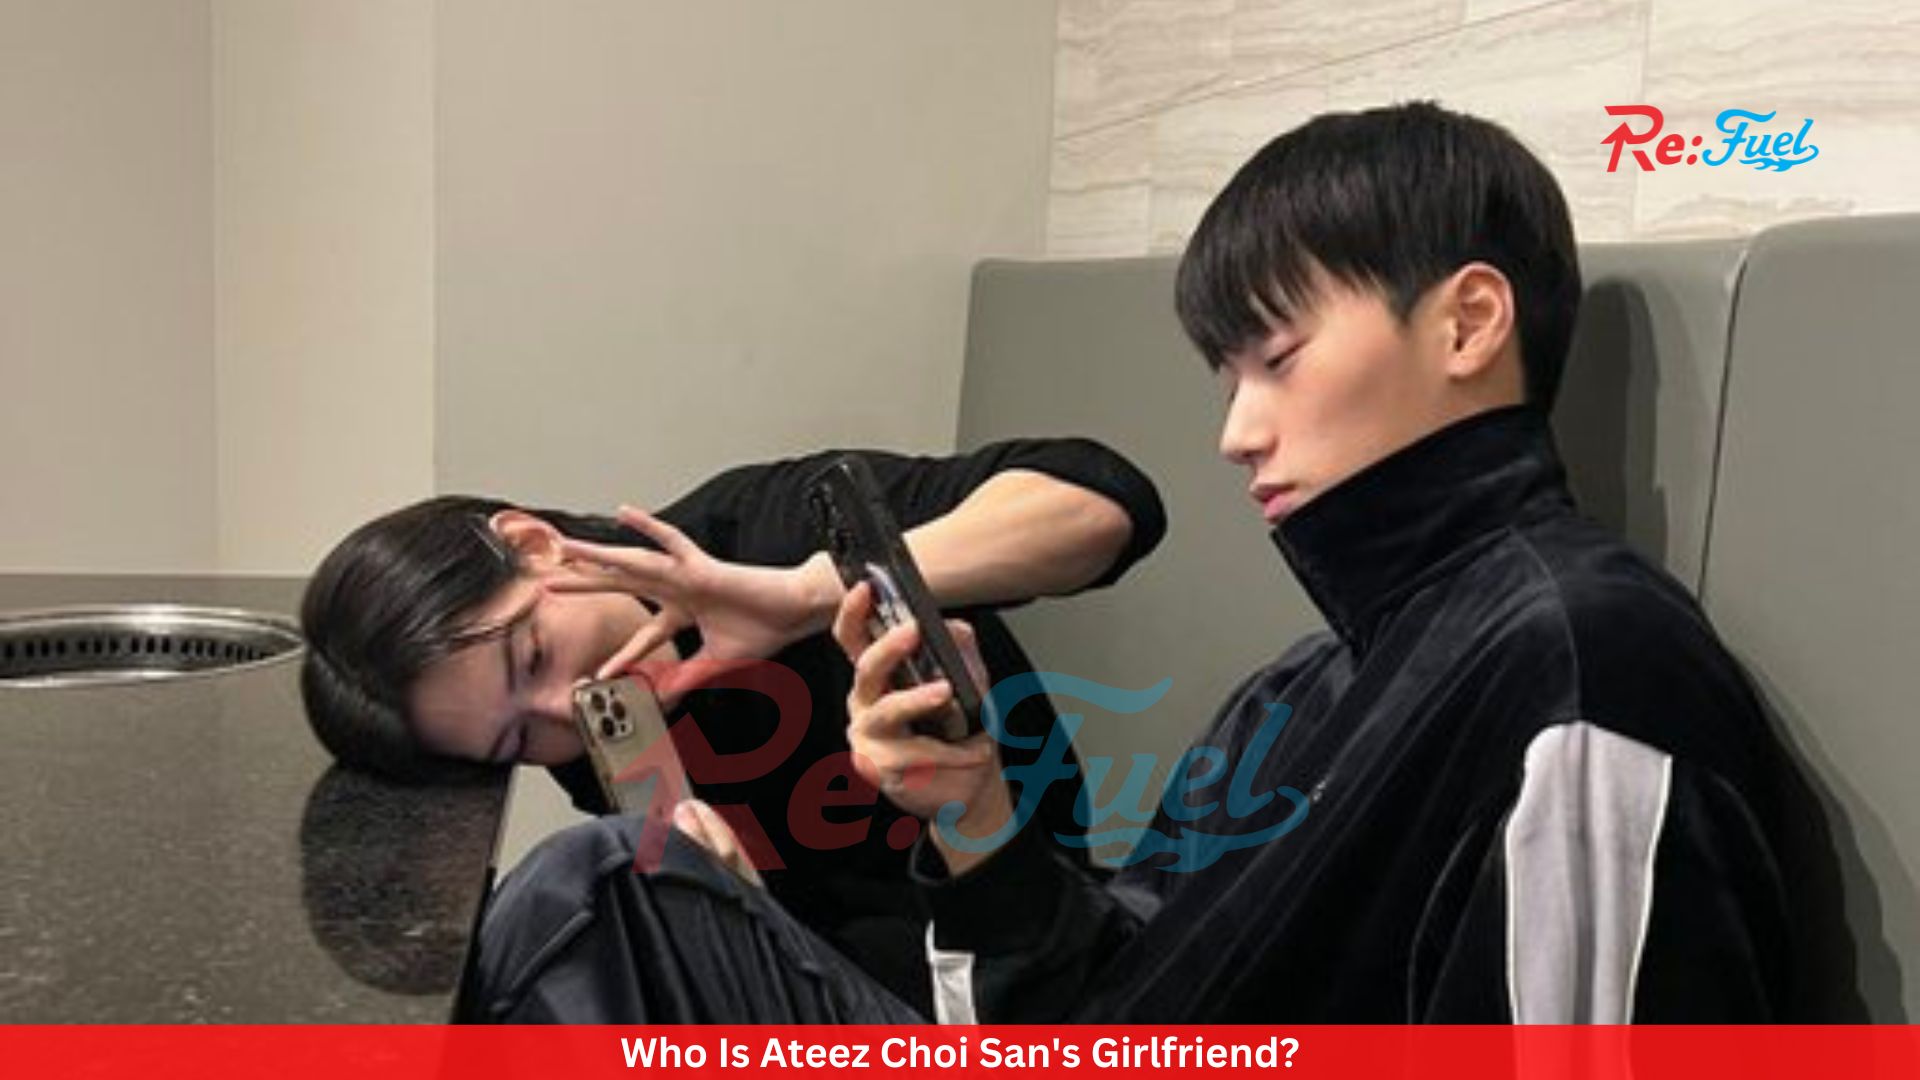 Who Is Ateez Choi San's Girlfriend?